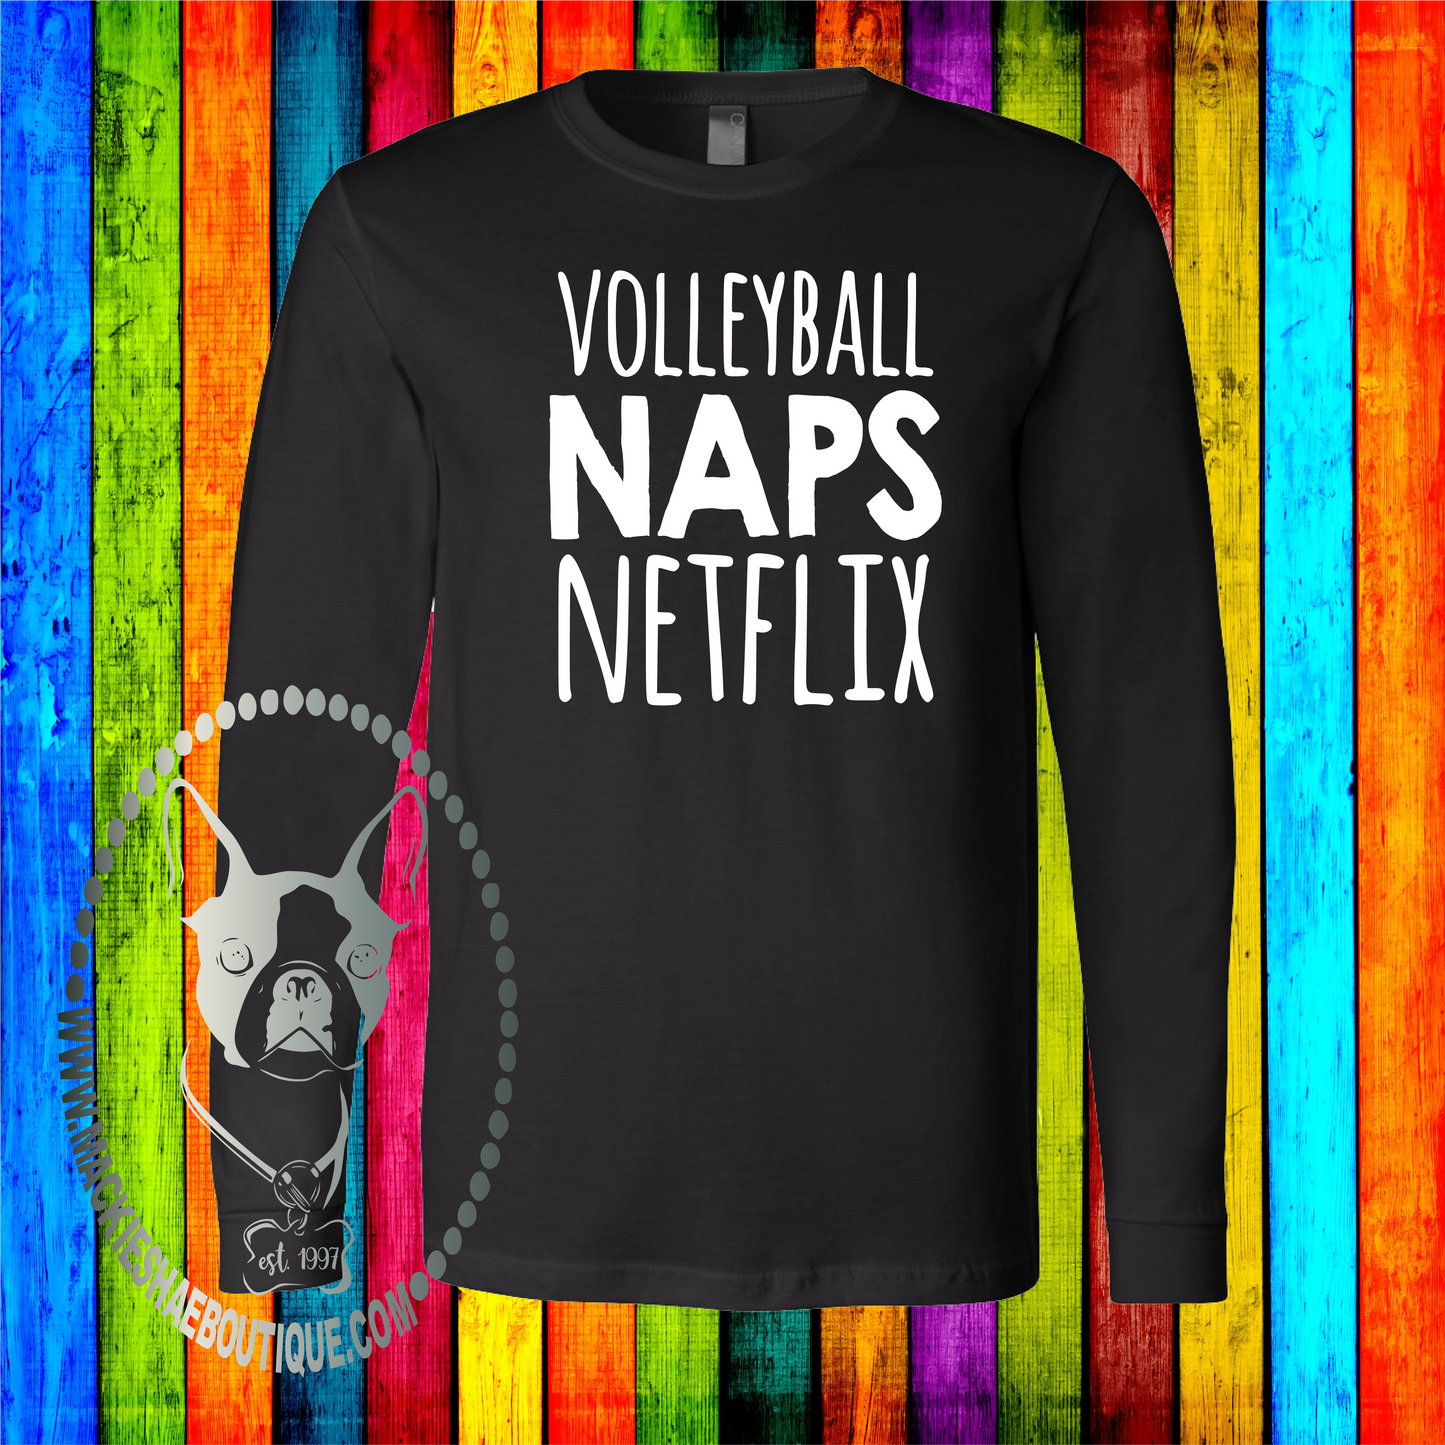 Volleyball Naps Netflix Custom Shirt, Soft Long Sleeve Tee